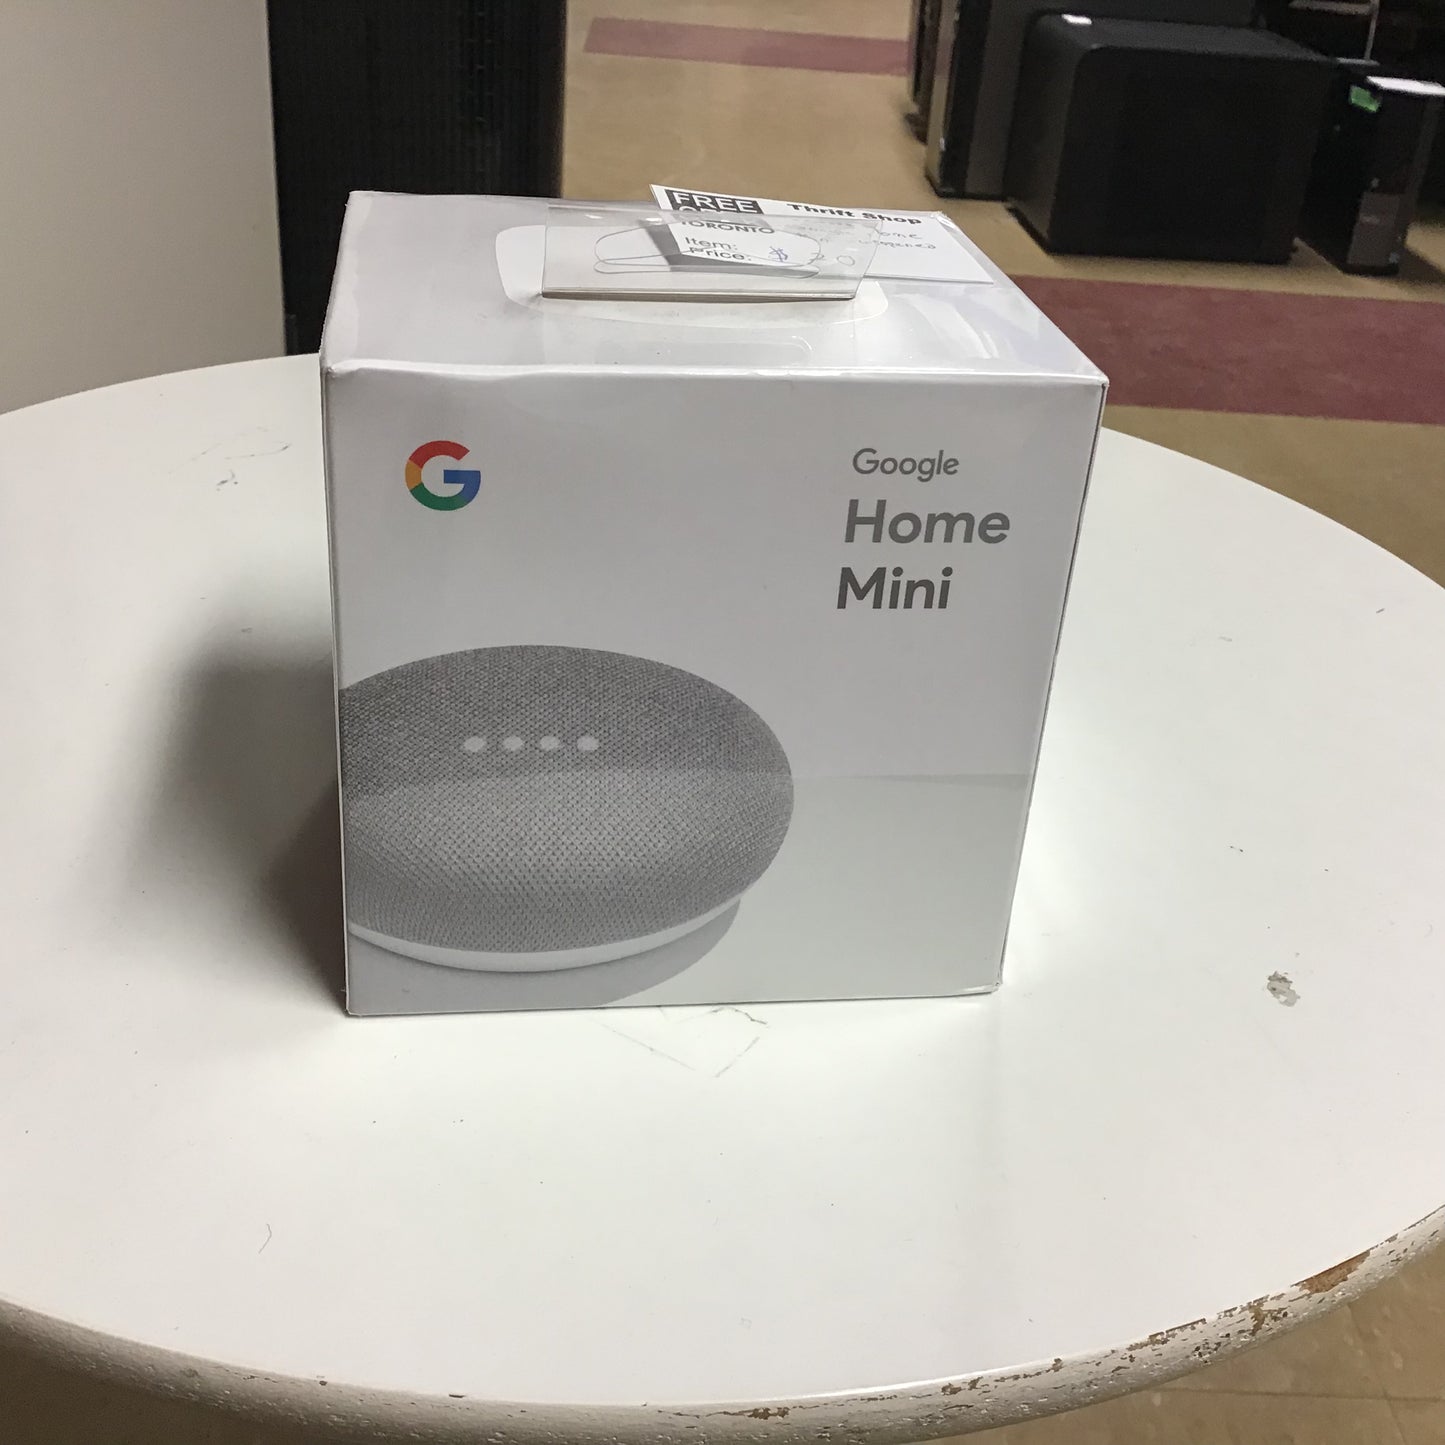 Google Home Mini - Unopened